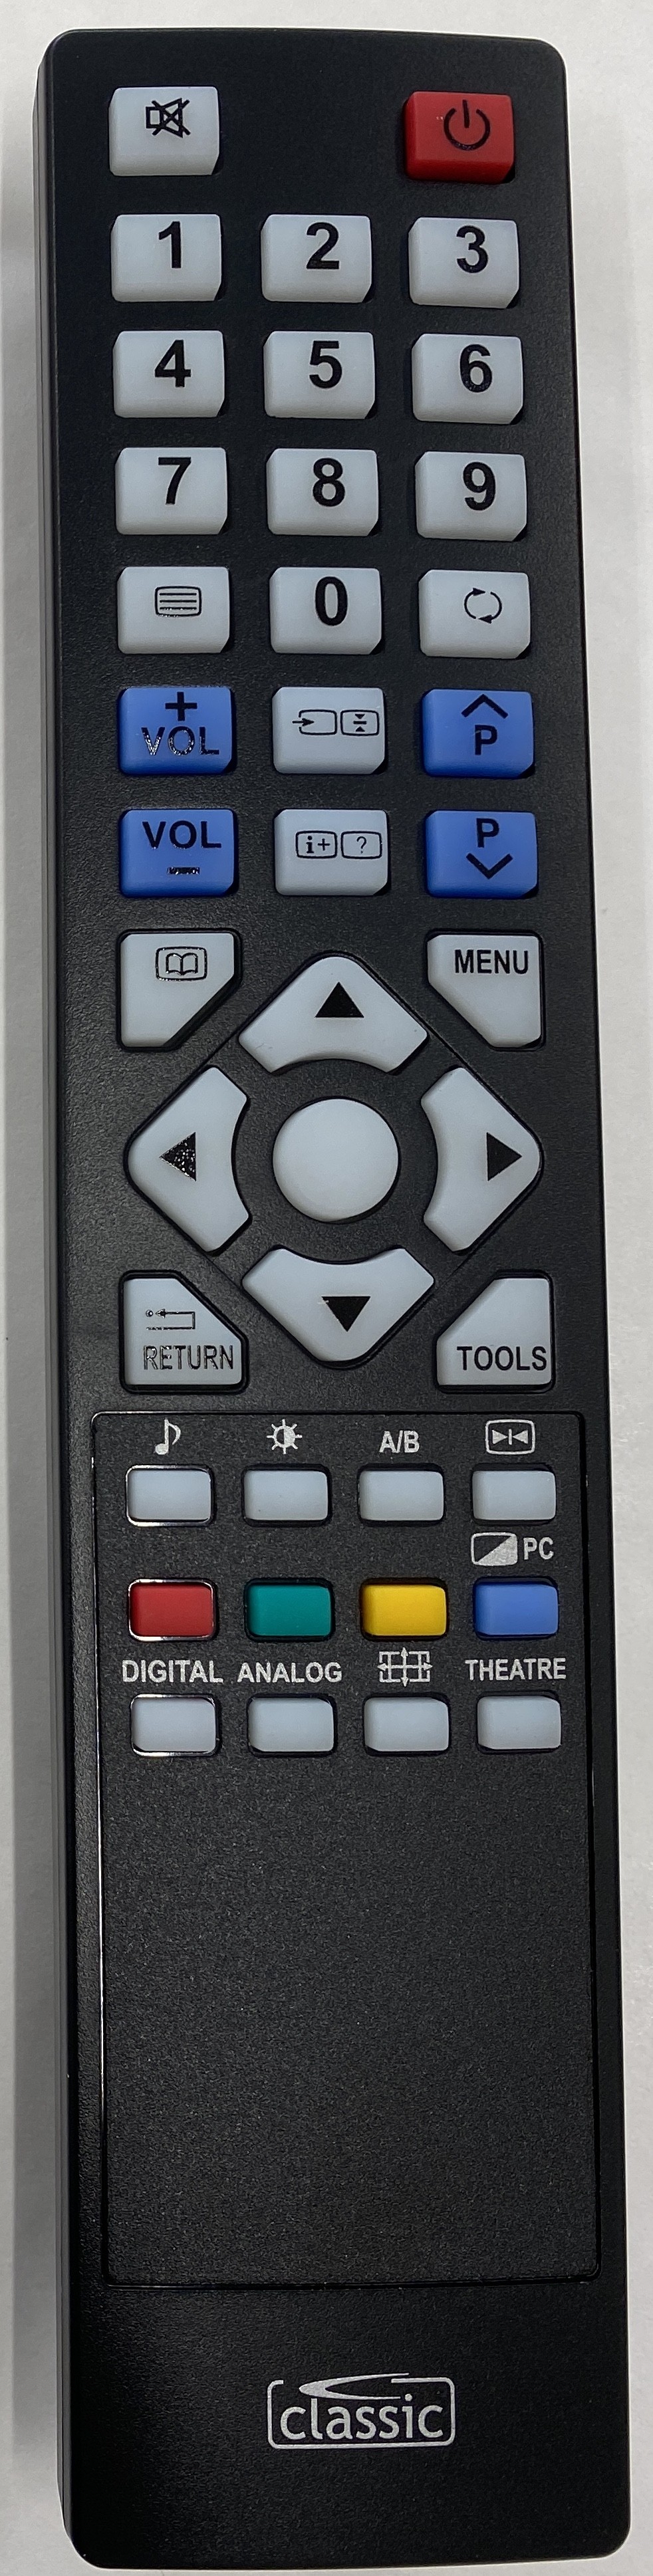 SONY RMED005 Remote Control Alternative